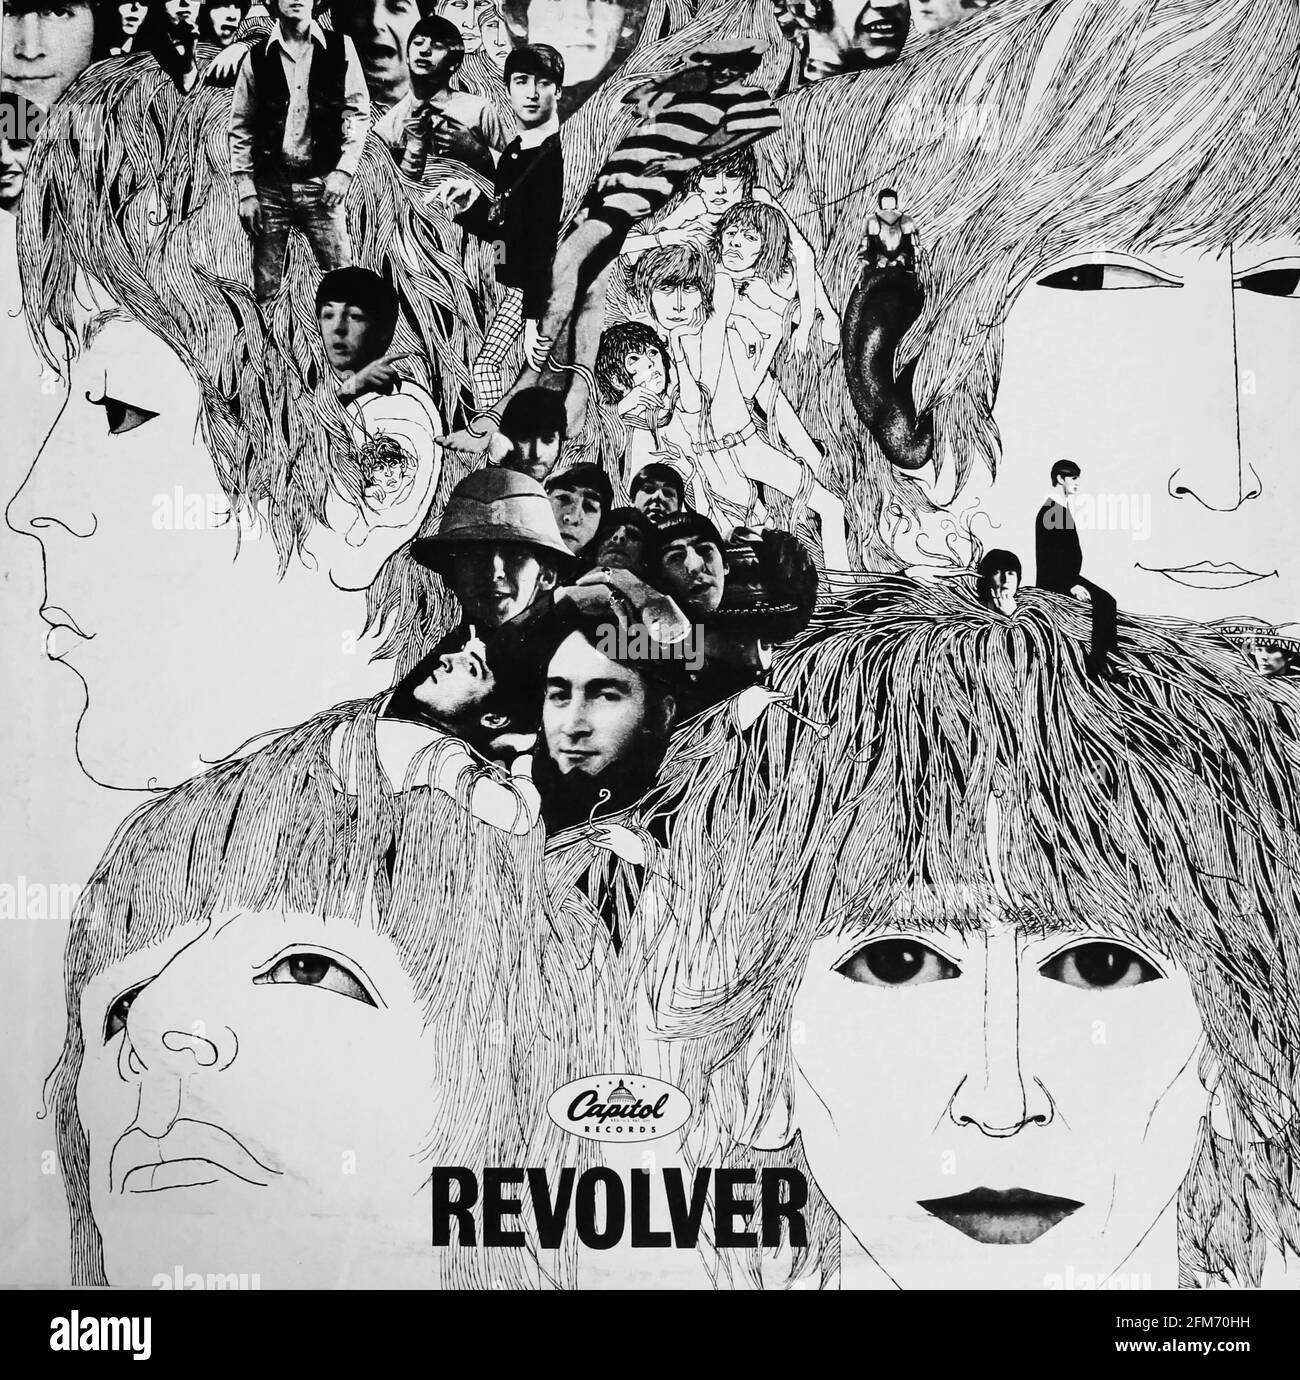 English rock band The Beatles music album on vinyl record LP disc. Titled: Revolver album cover Stock Photo